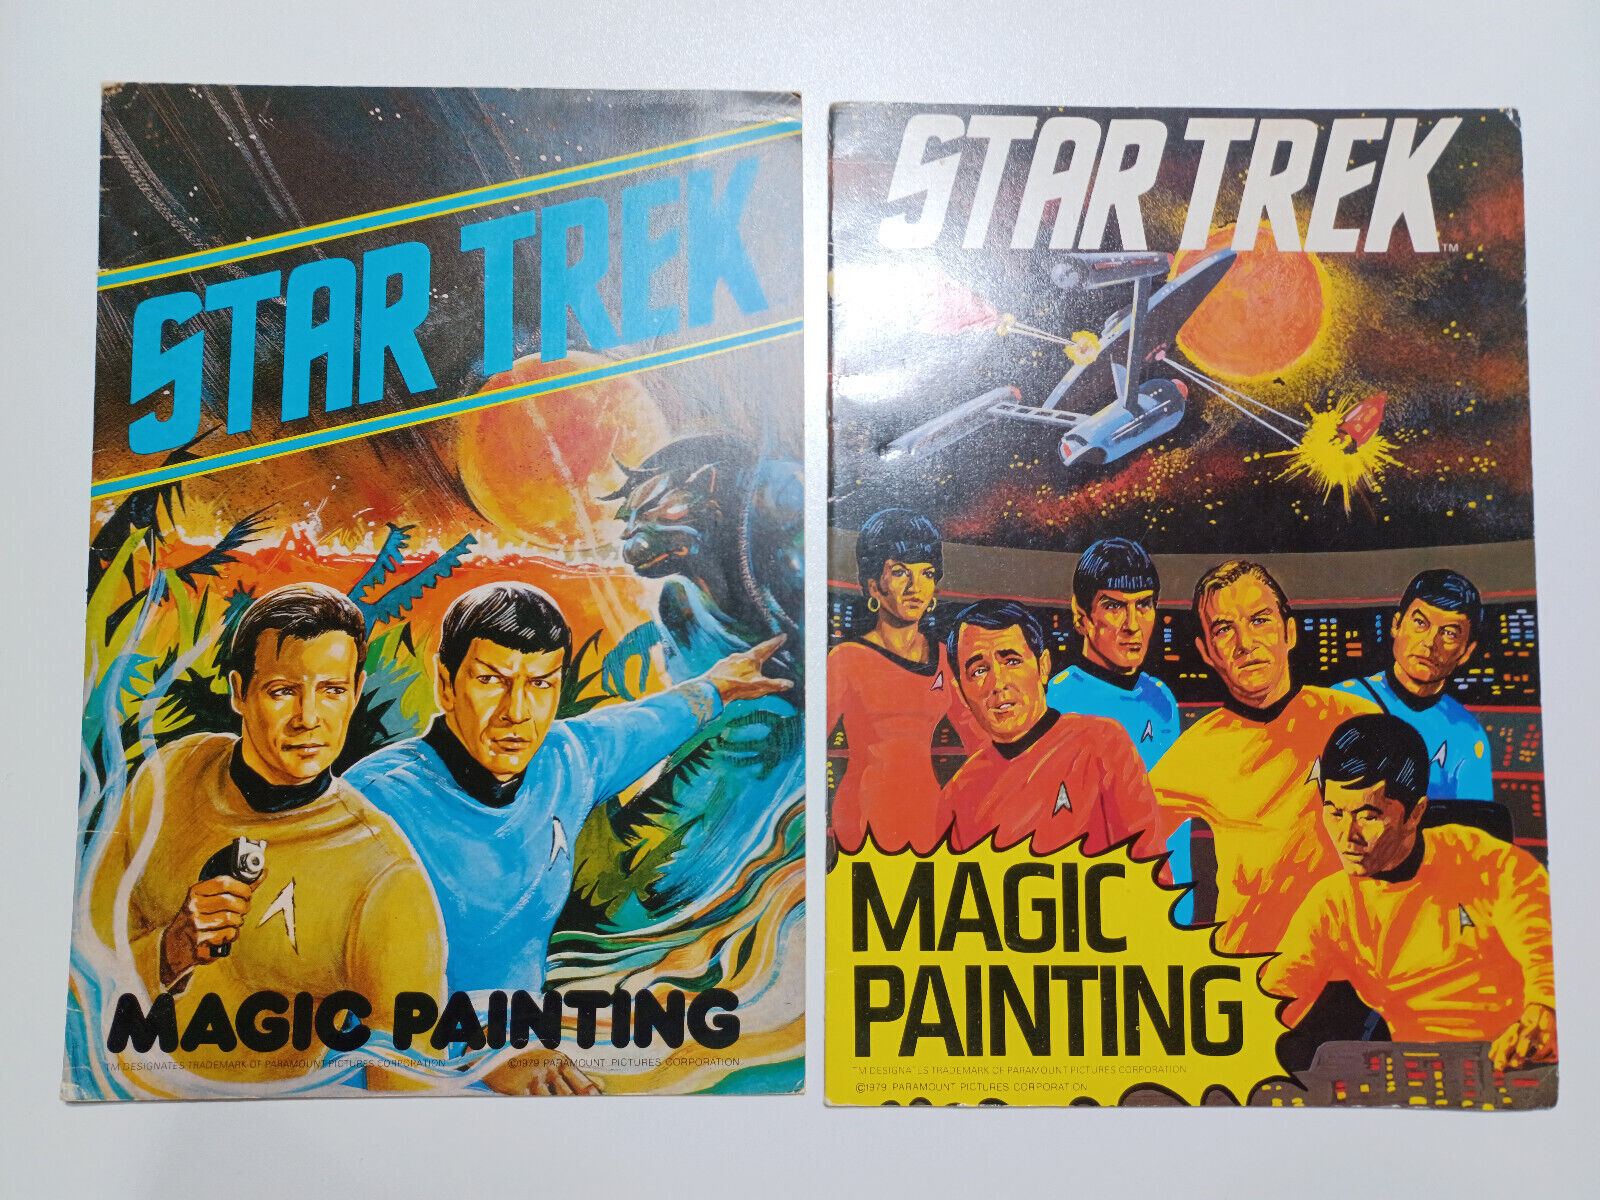 2x Lot of Star Trek Magic Painting Talbotworth Ltd. Books England Import $0 Ship